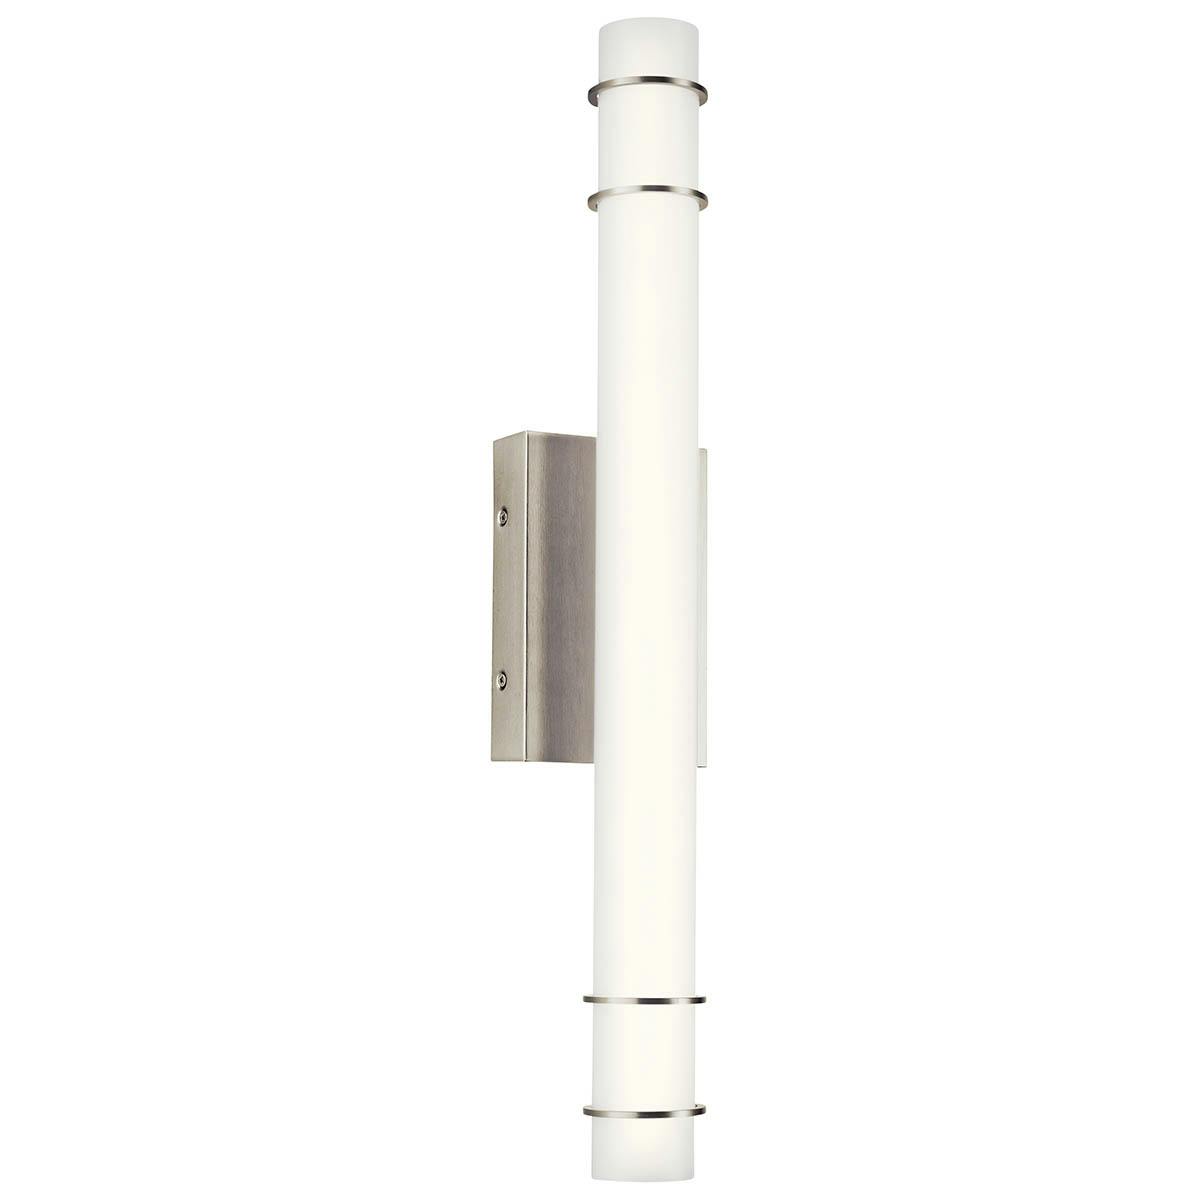 Korona 24" LED Linear Vanity Light Nickel on a white background